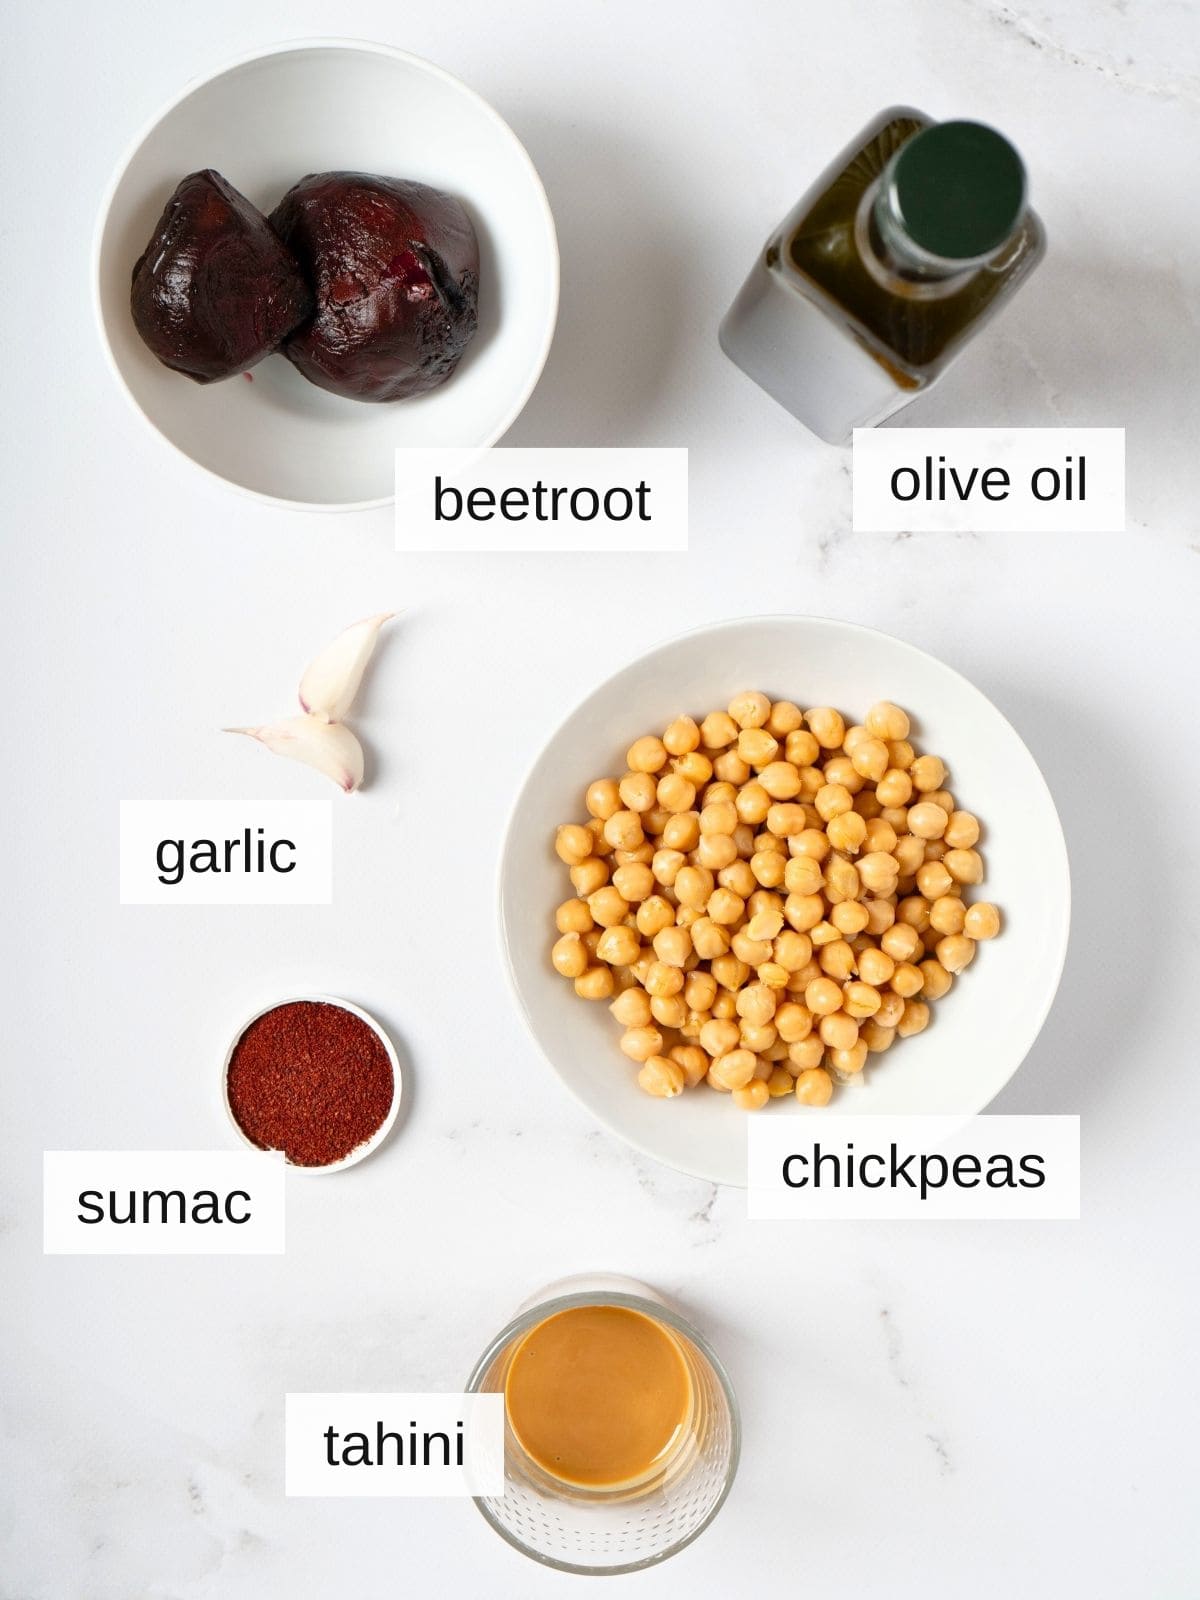 ingredients for beetroot hummus, including olive oil, garlic, sumac, tahini, chickpeas, beetroot.